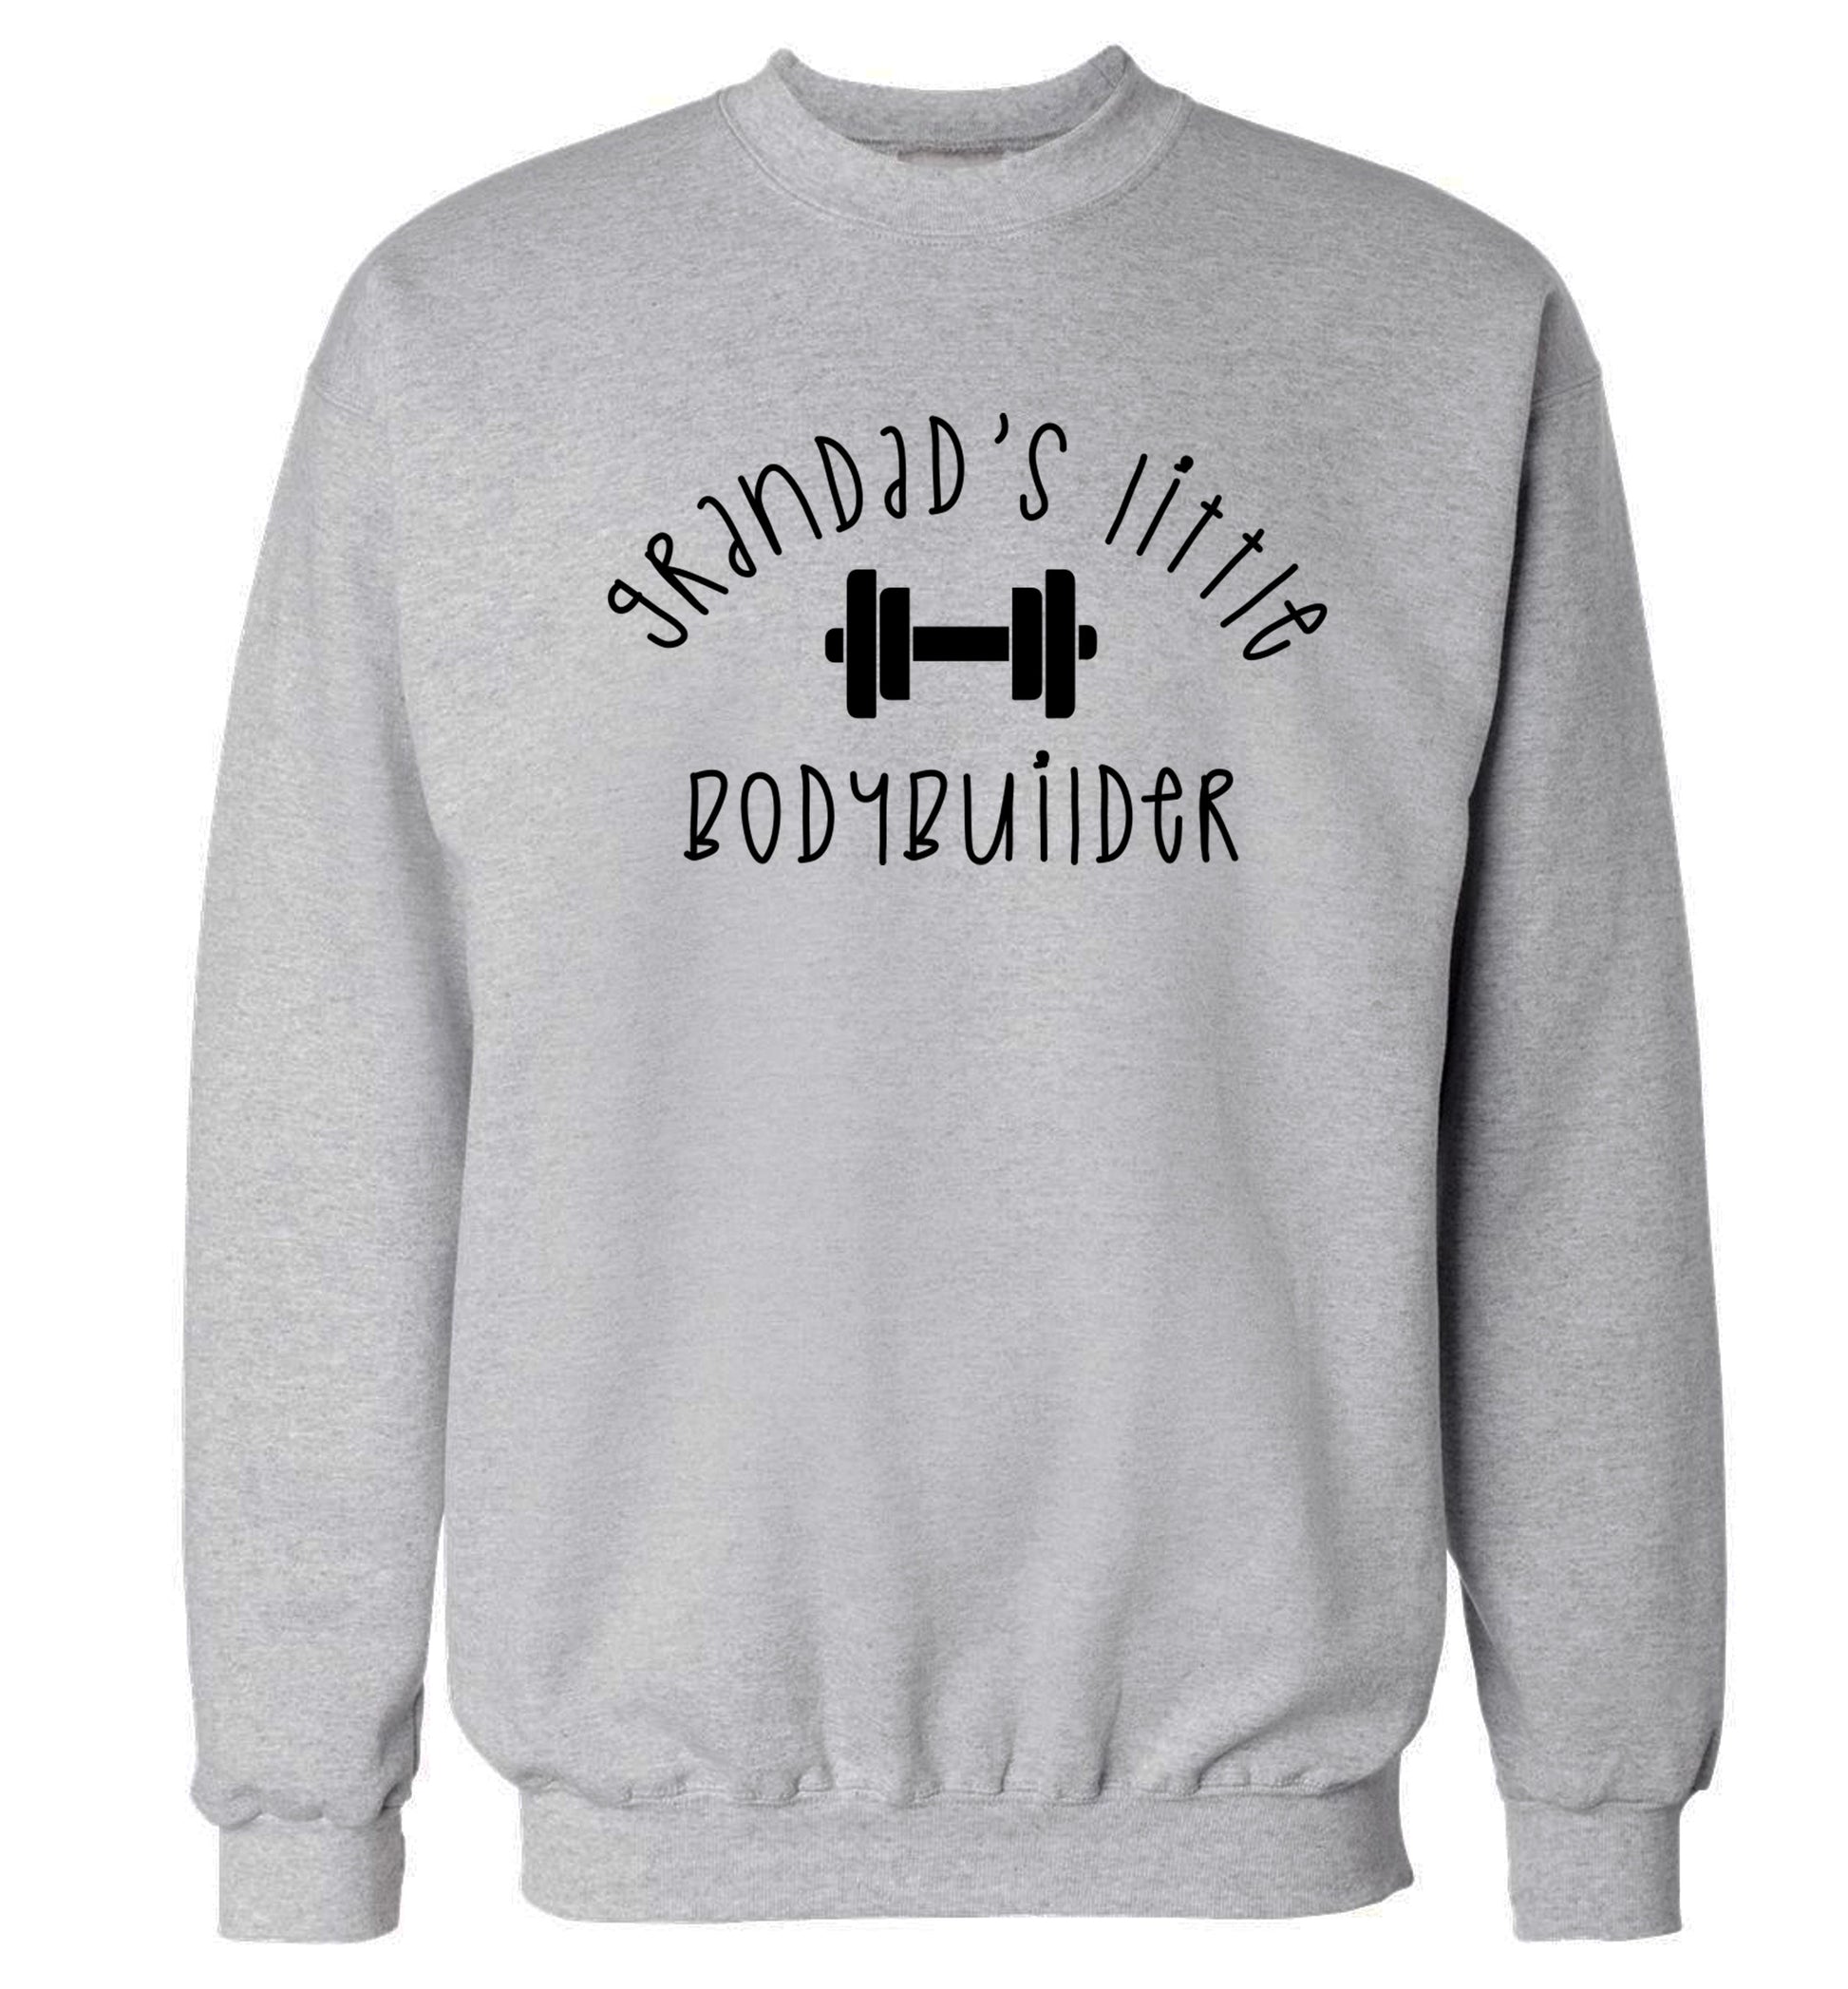 Grandad's little bodybuilder Adult's unisex grey Sweater 2XL